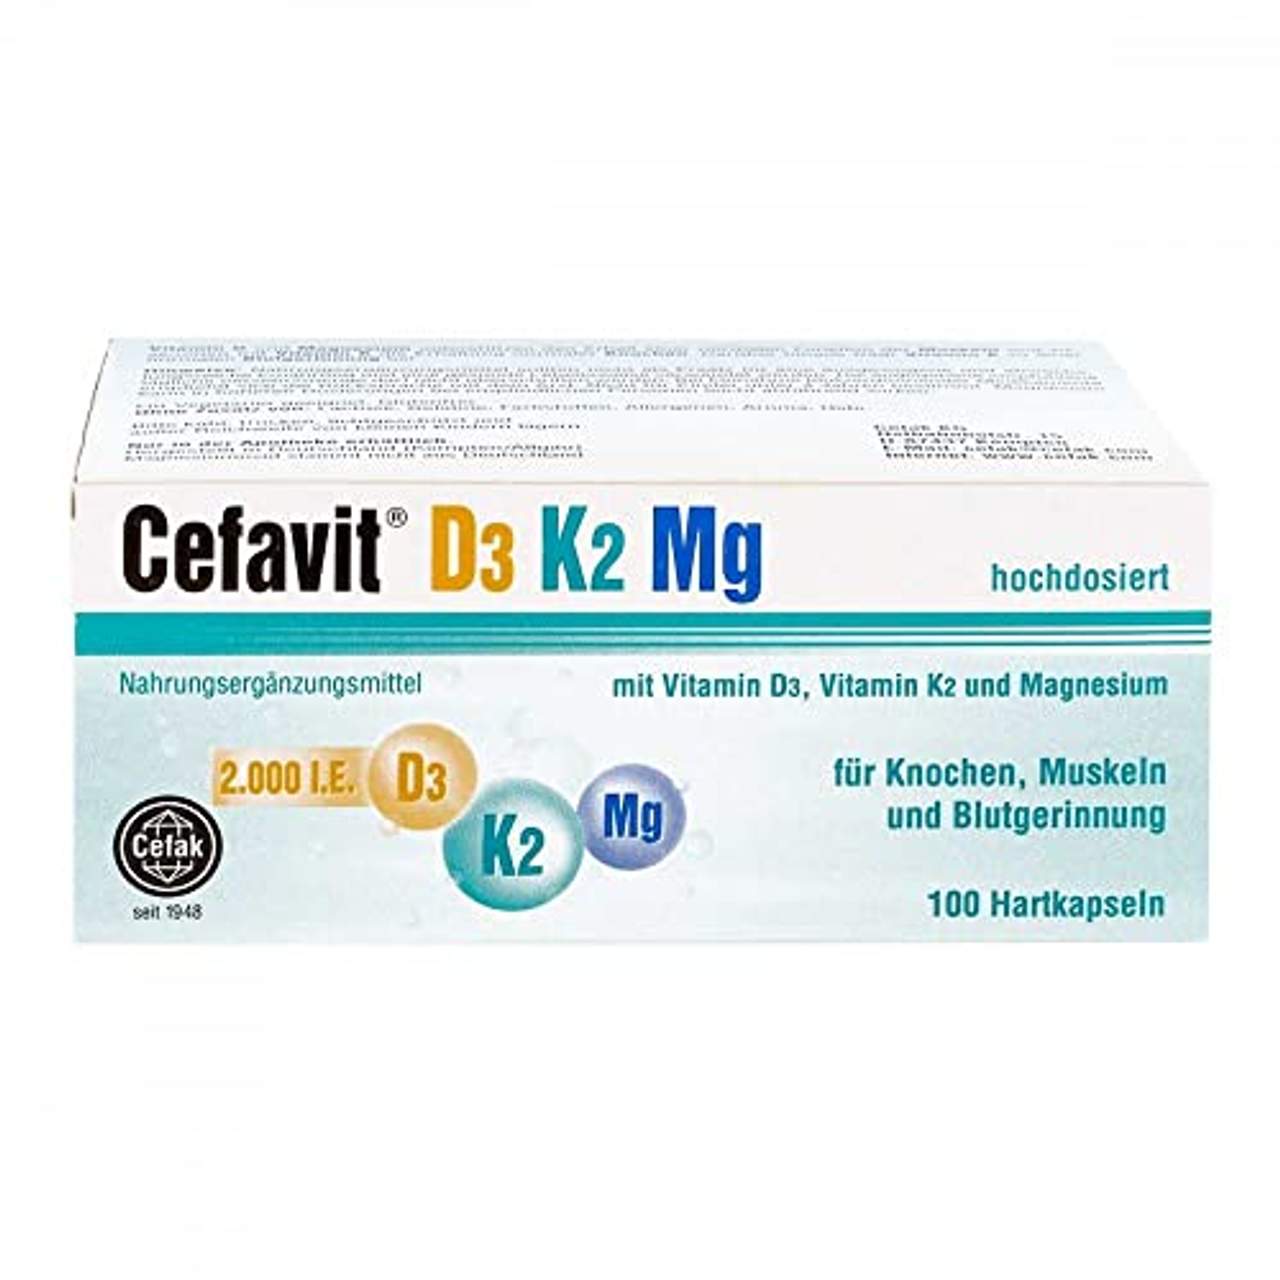 Cefavit D3 K2 Mg Hartkapseln